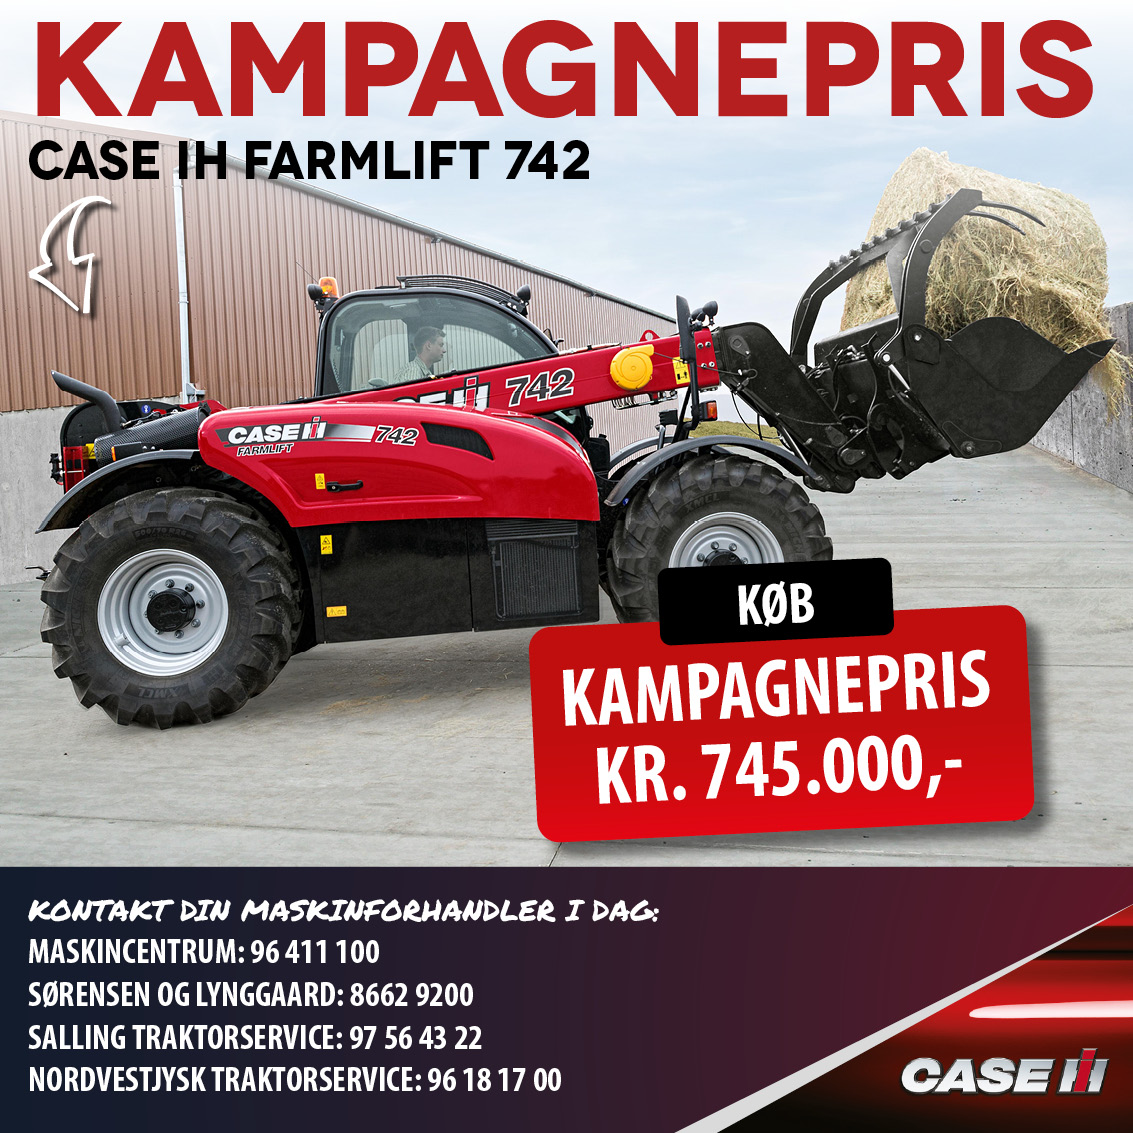 Case IH Farmlift 742 kampagnepris